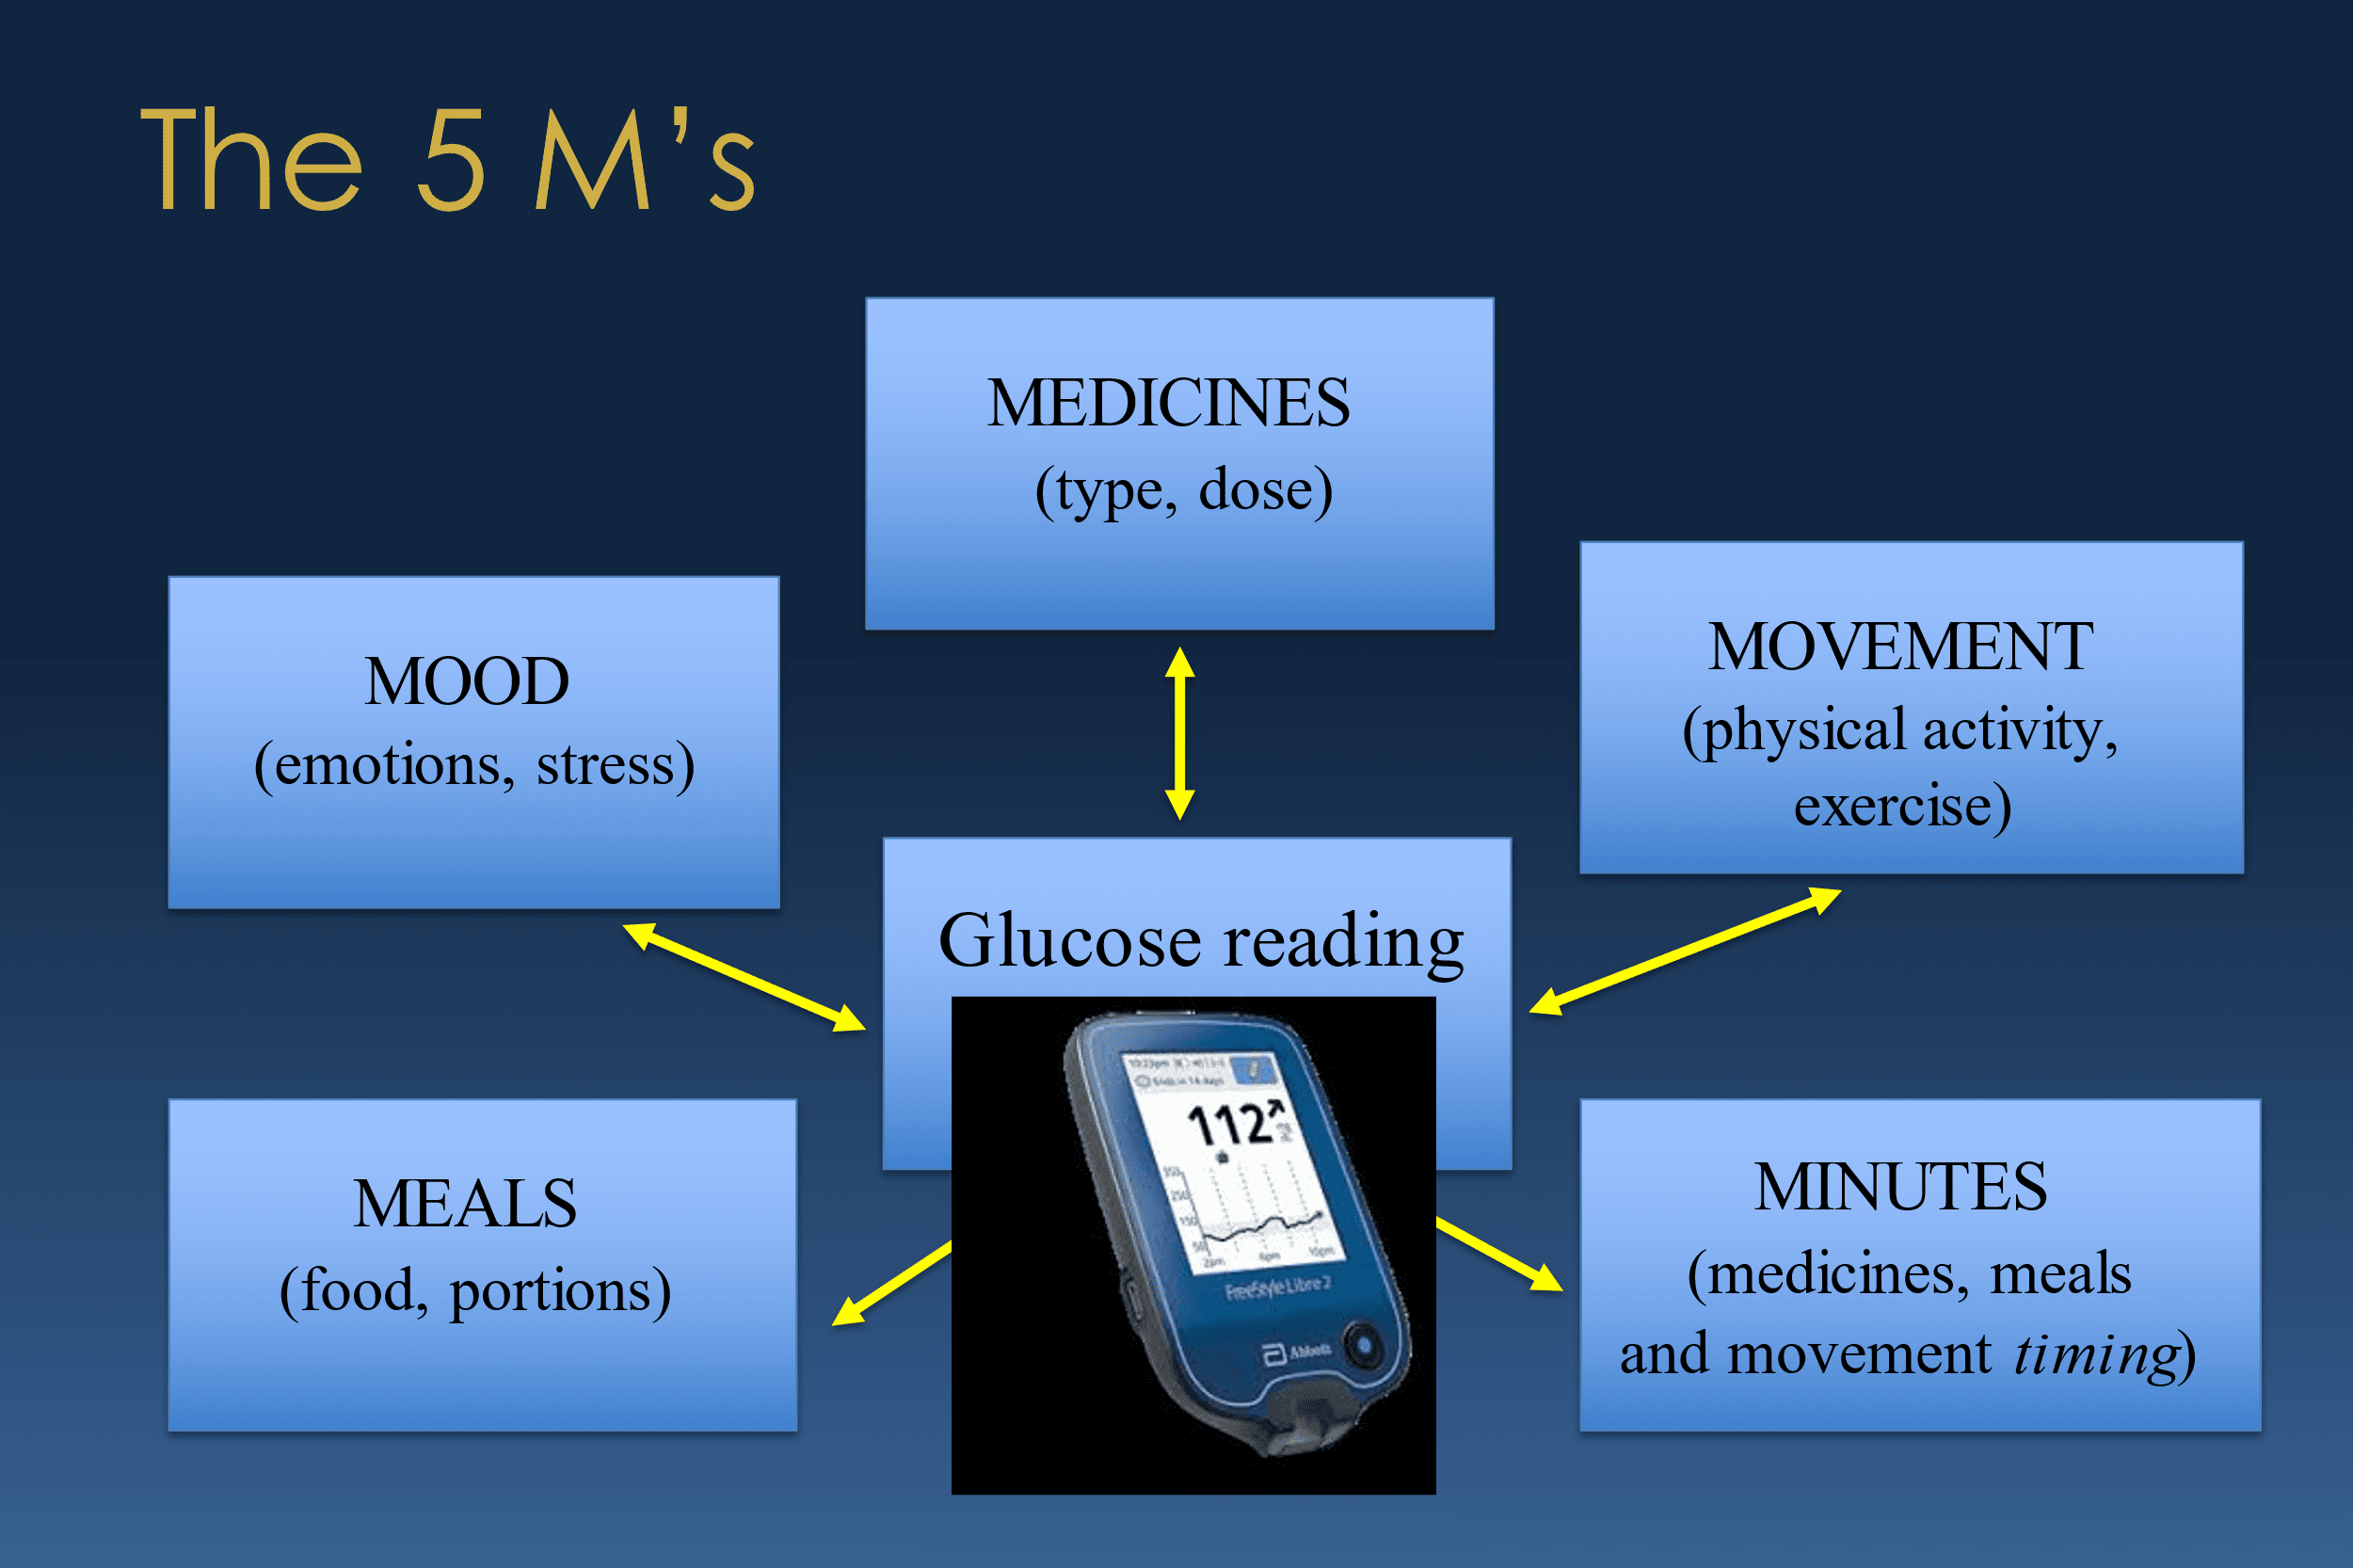 Image describing the 5 Ms